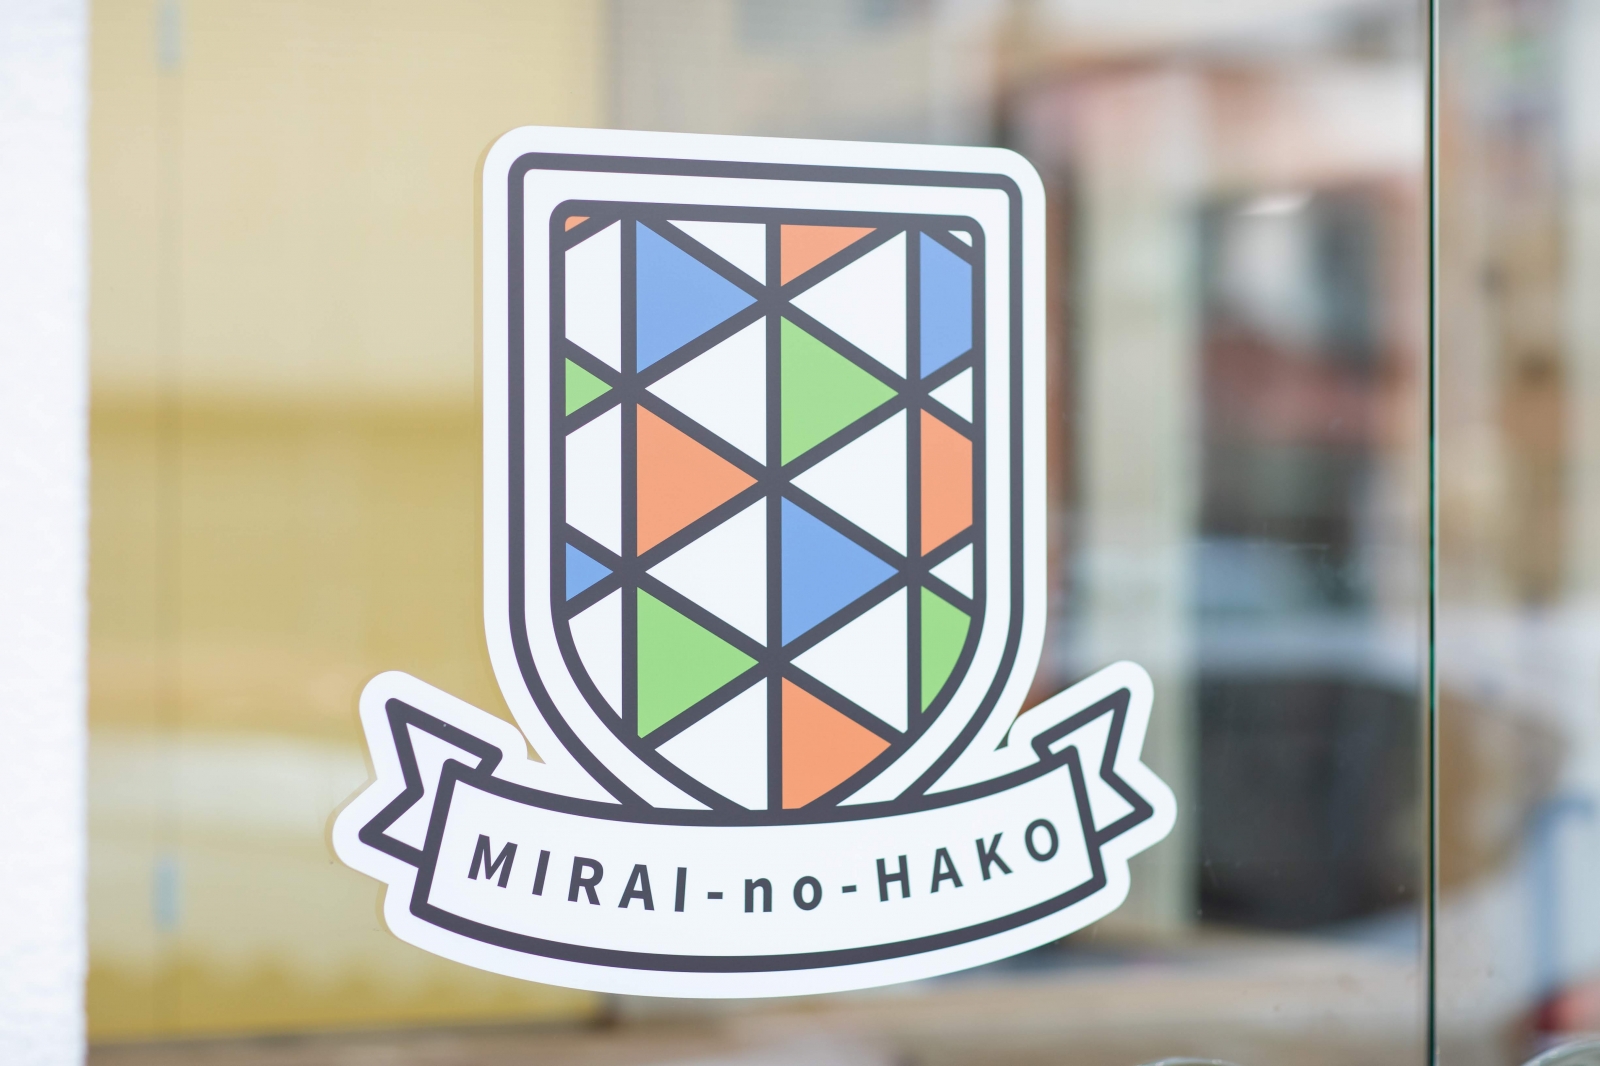 Mirai no Hako Portuguese Guide